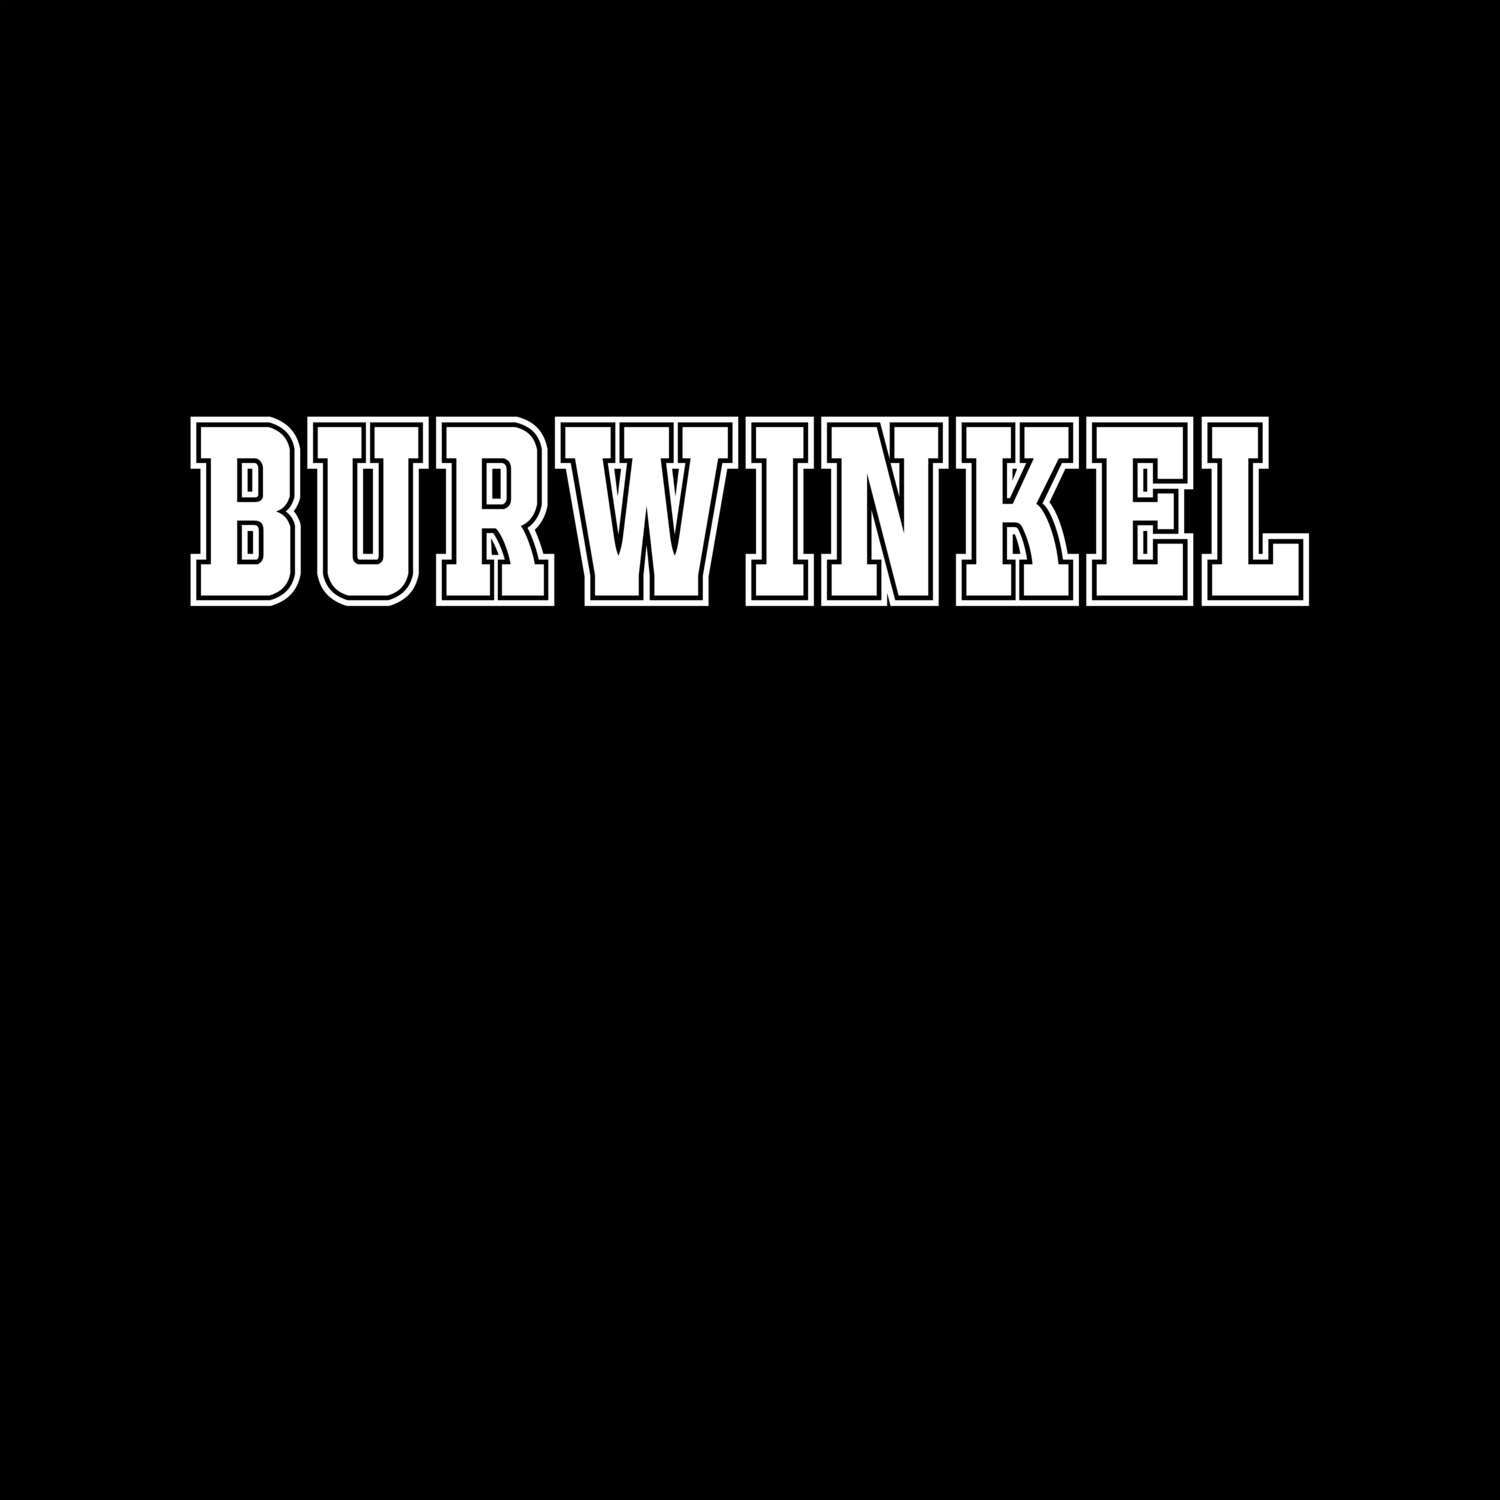 Burwinkel T-Shirt »Classic«